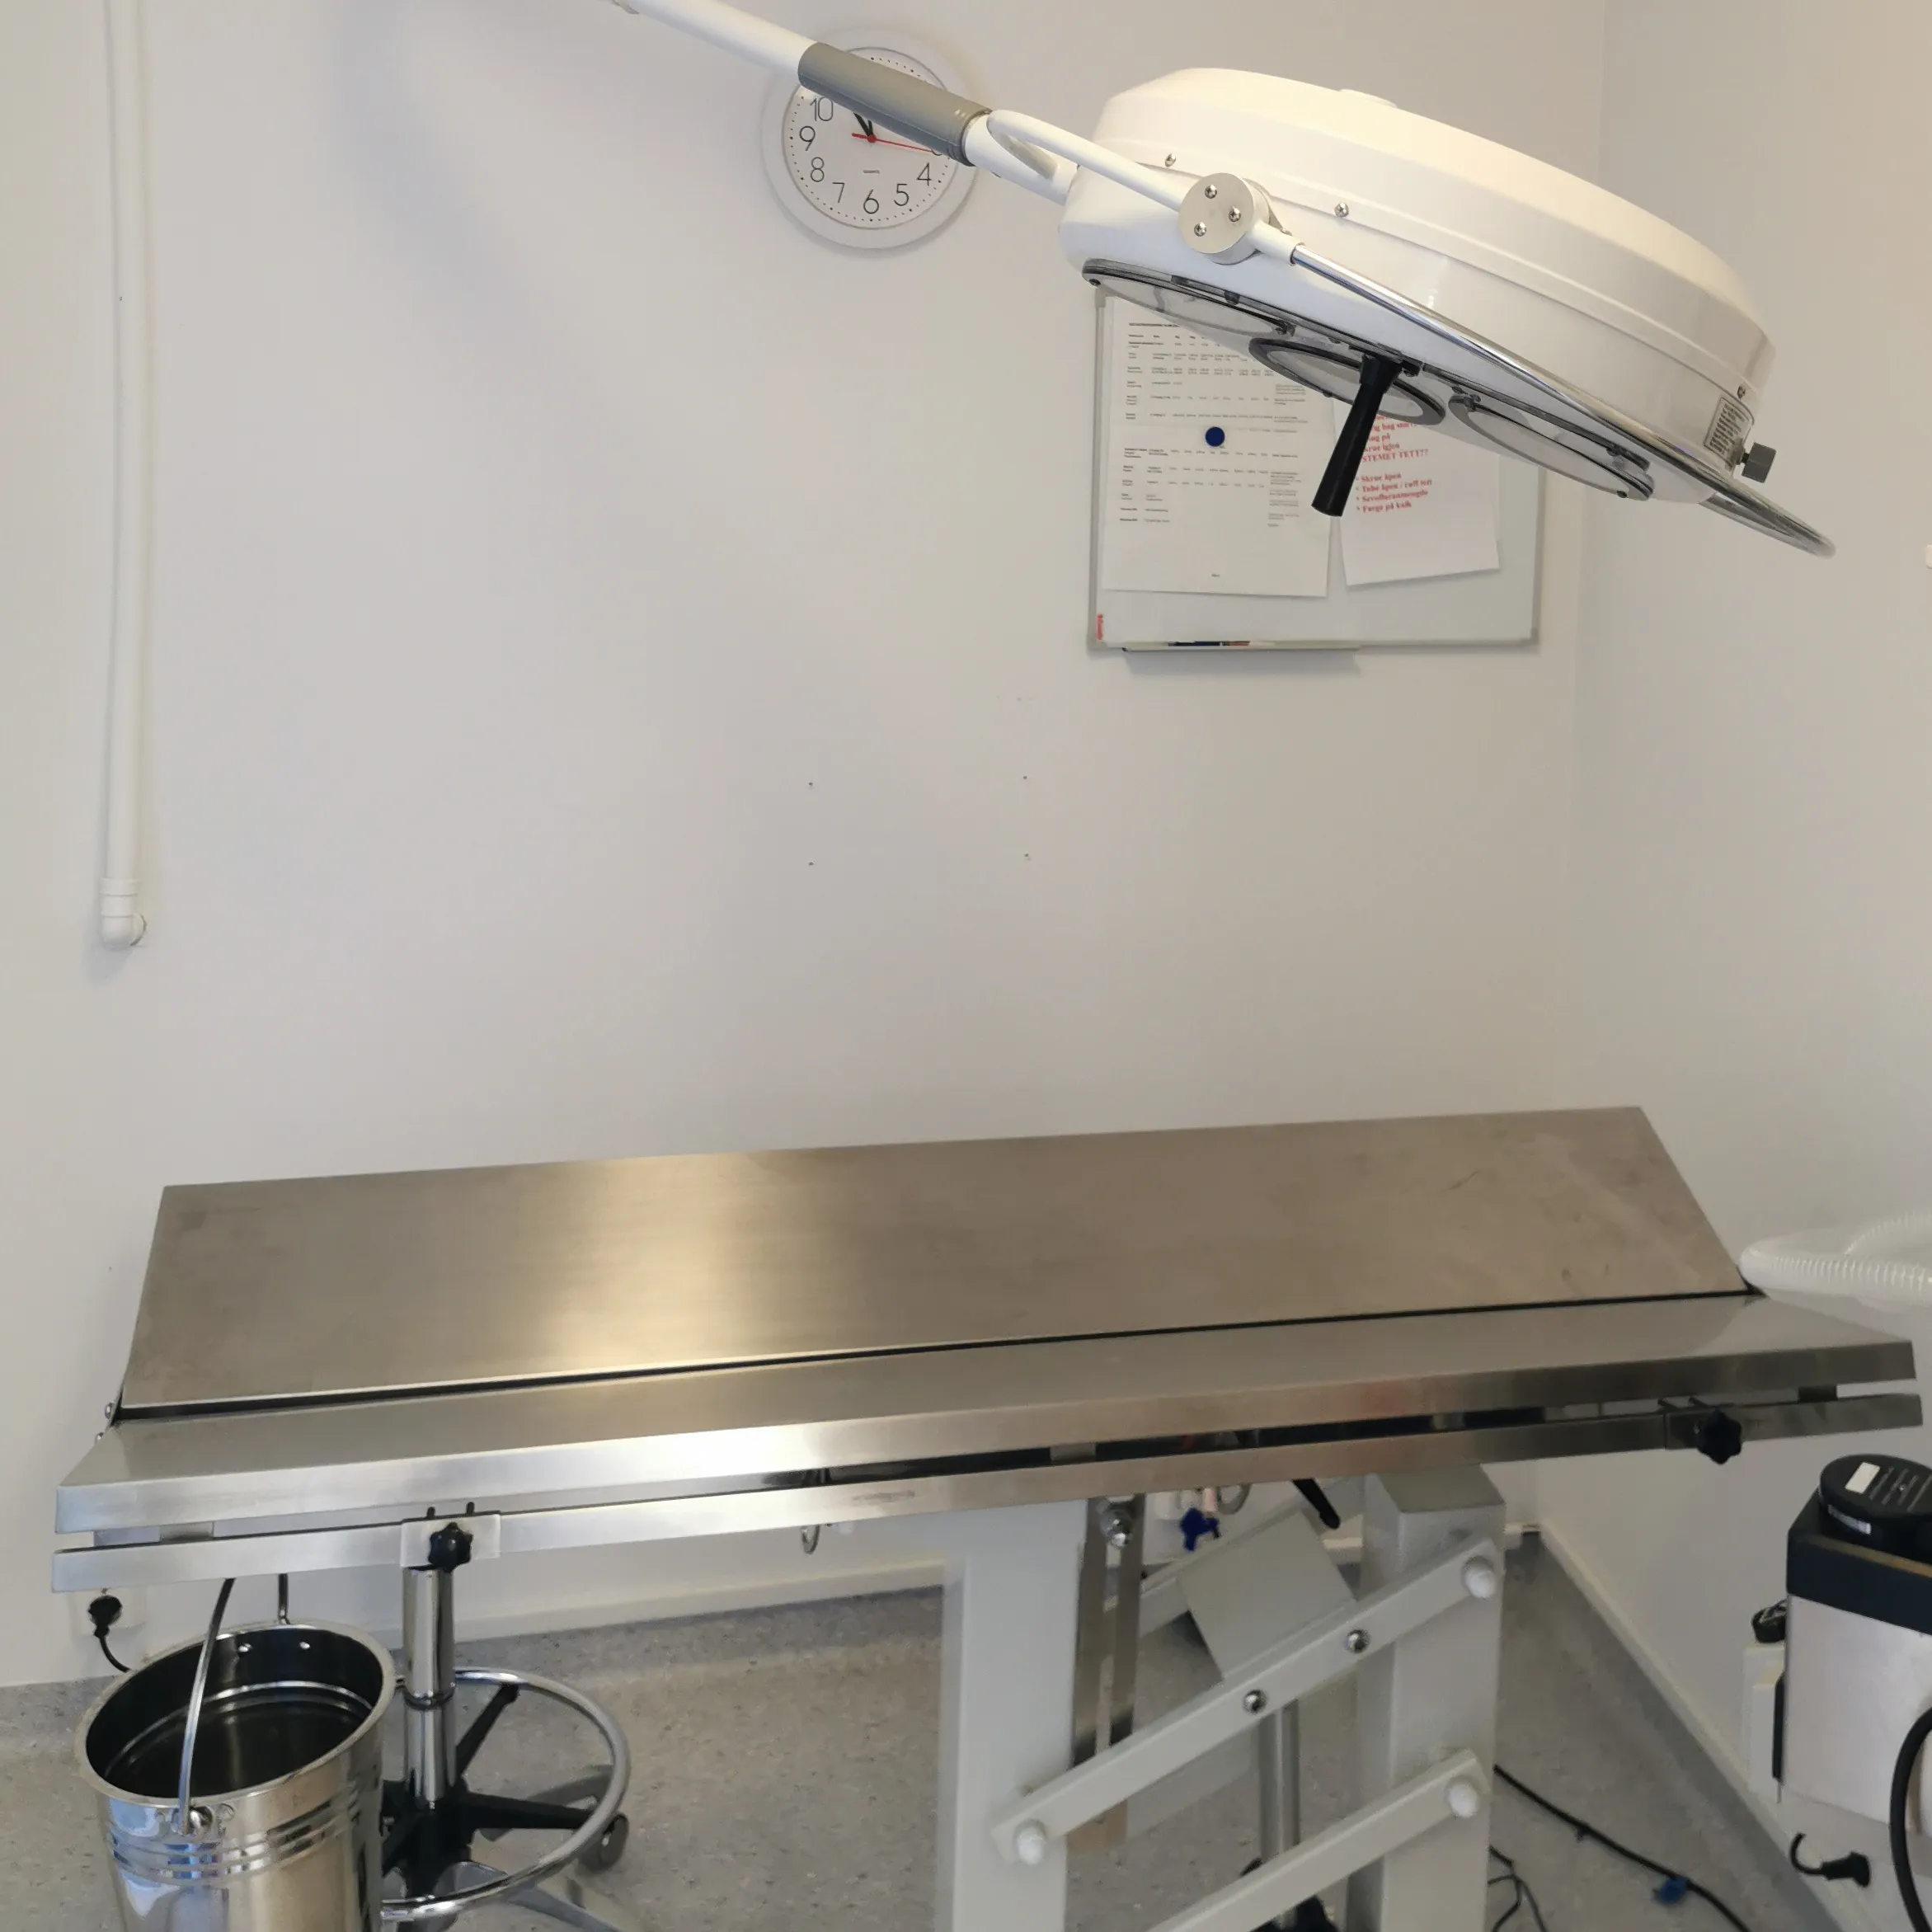 SUS304 S/S Tabletop IV pole Mesa de operaciones de clínica veterinaria Classic Z Shape Pet Hospital Mesa DE OPERACIONES eléctrica